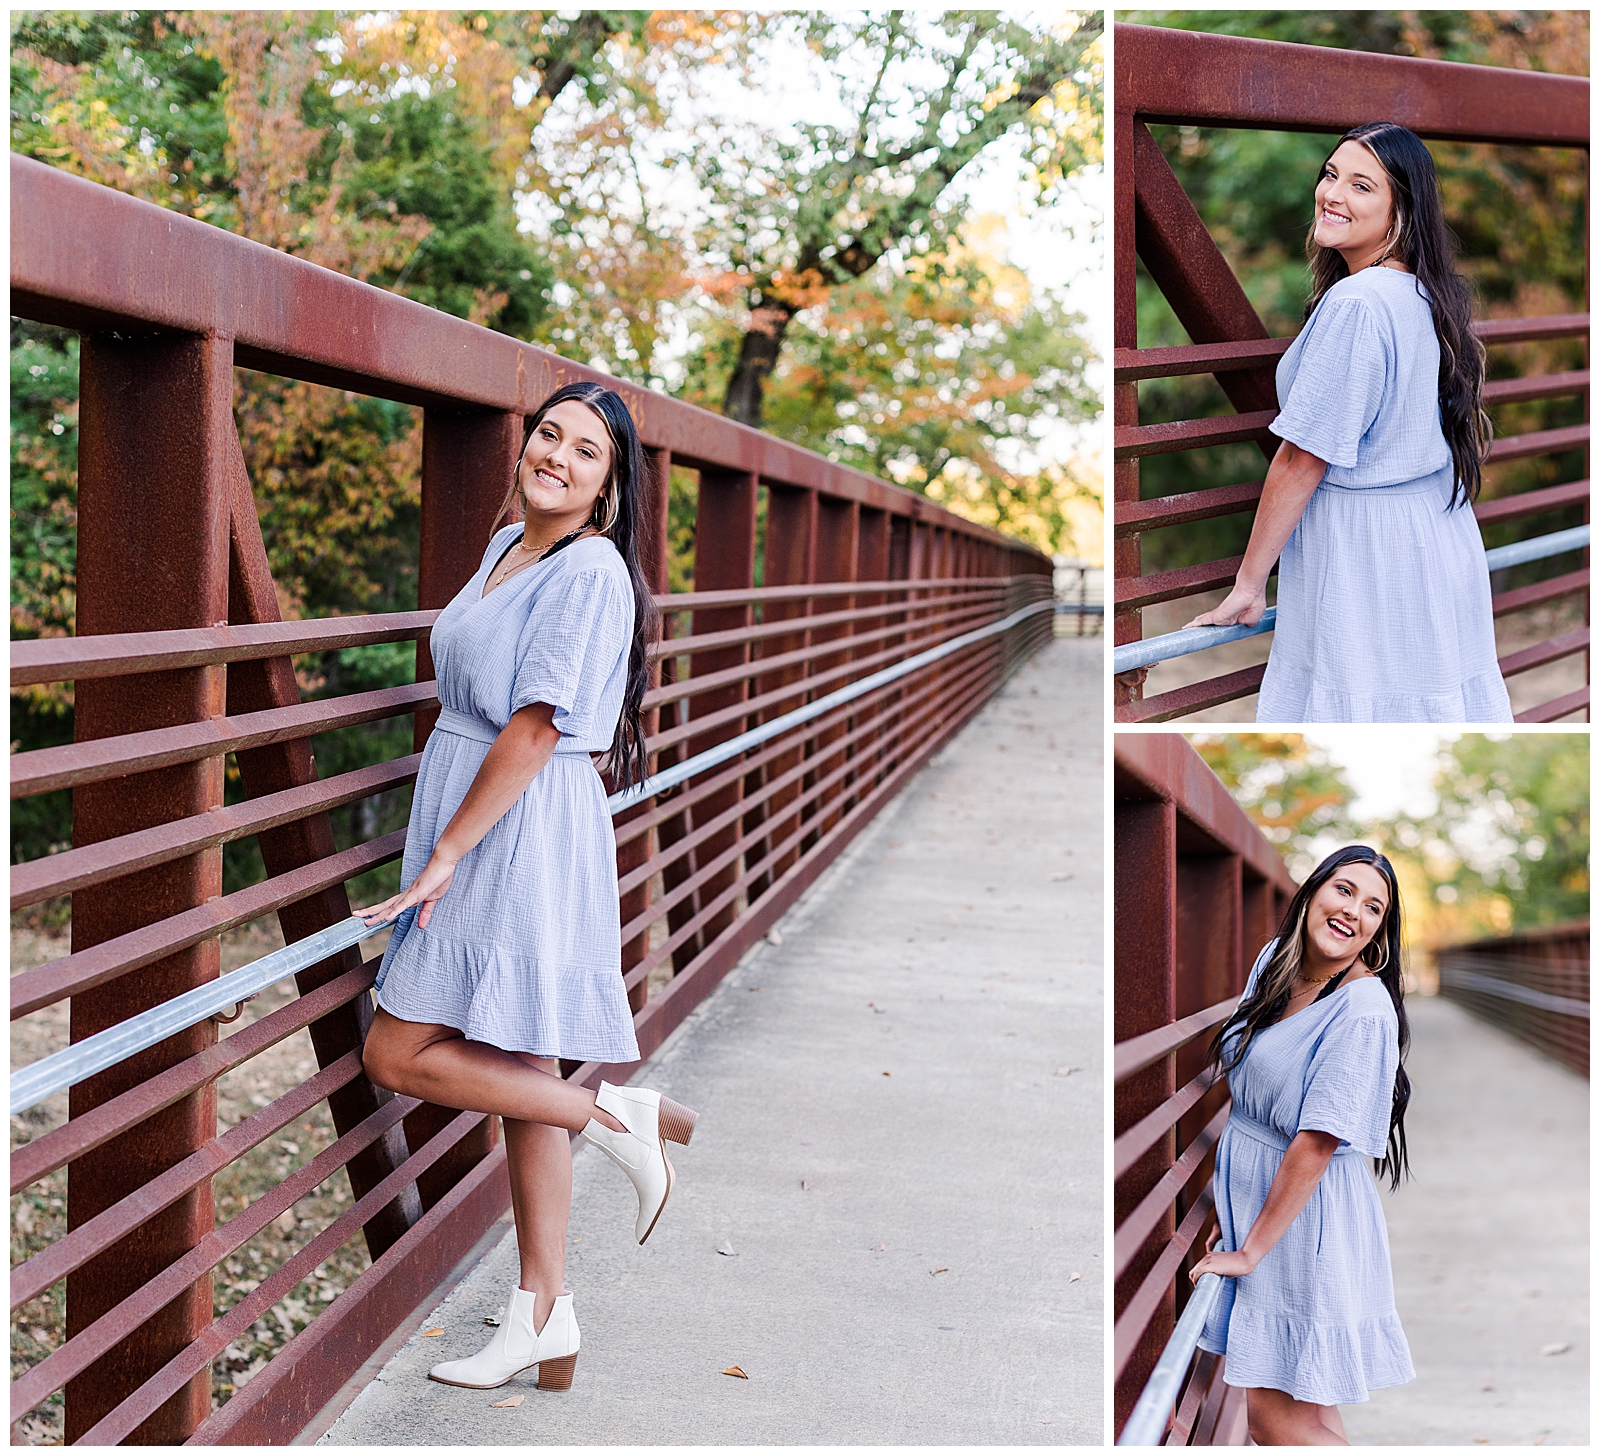 High school senior girl wearing a lavender-colored dress, standing on a bridge.